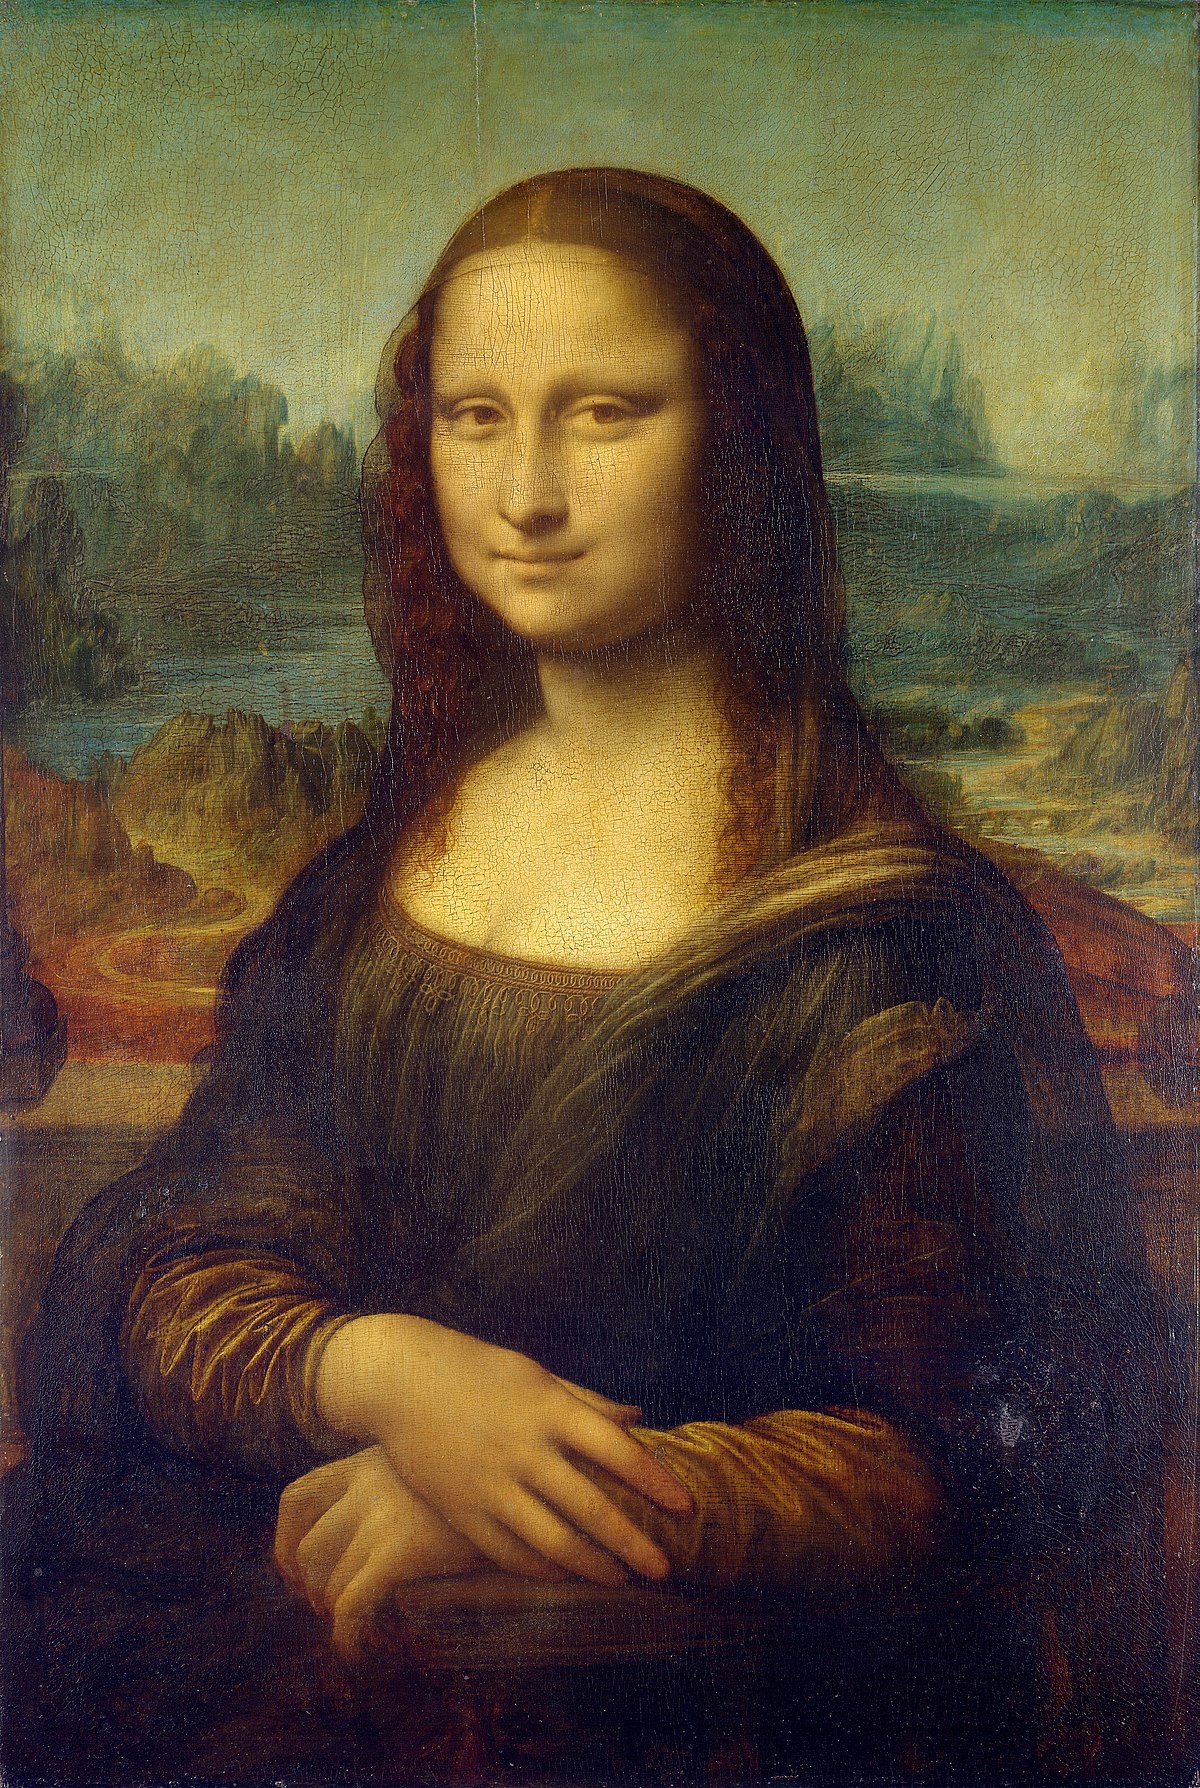 https://upload.wikimedia.org/wikipedia/commons/thumb/e/ec/Mona_Lisa%2C_by_Leonardo_da_Vinci%2C_from_C2RMF_retouched.jpg/1200px-Mona_Lisa%2C_by_Leonardo_da_Vinci%2C_from_C2RMF_retouched.jpg